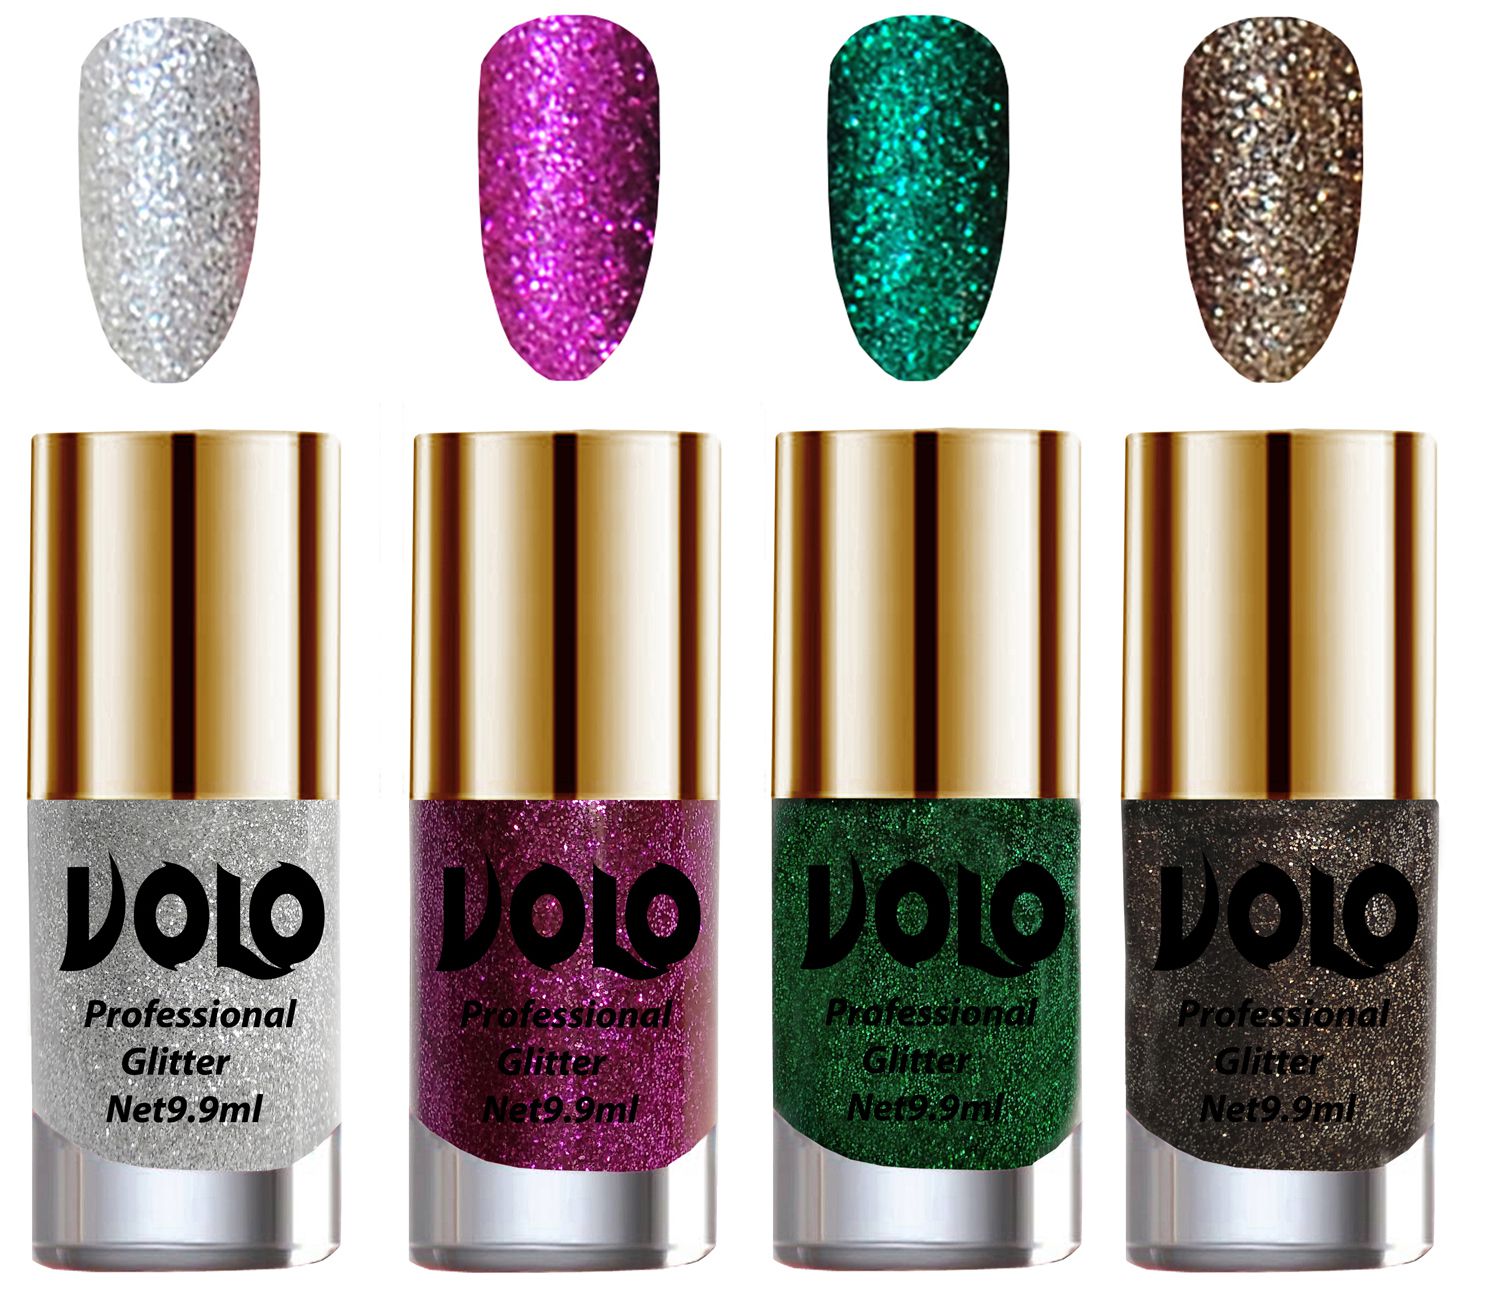     			VOLO Professionally Used Glitter Shine Nail Polish Silver,Purple,Green Grey Pack of 4 39 mL